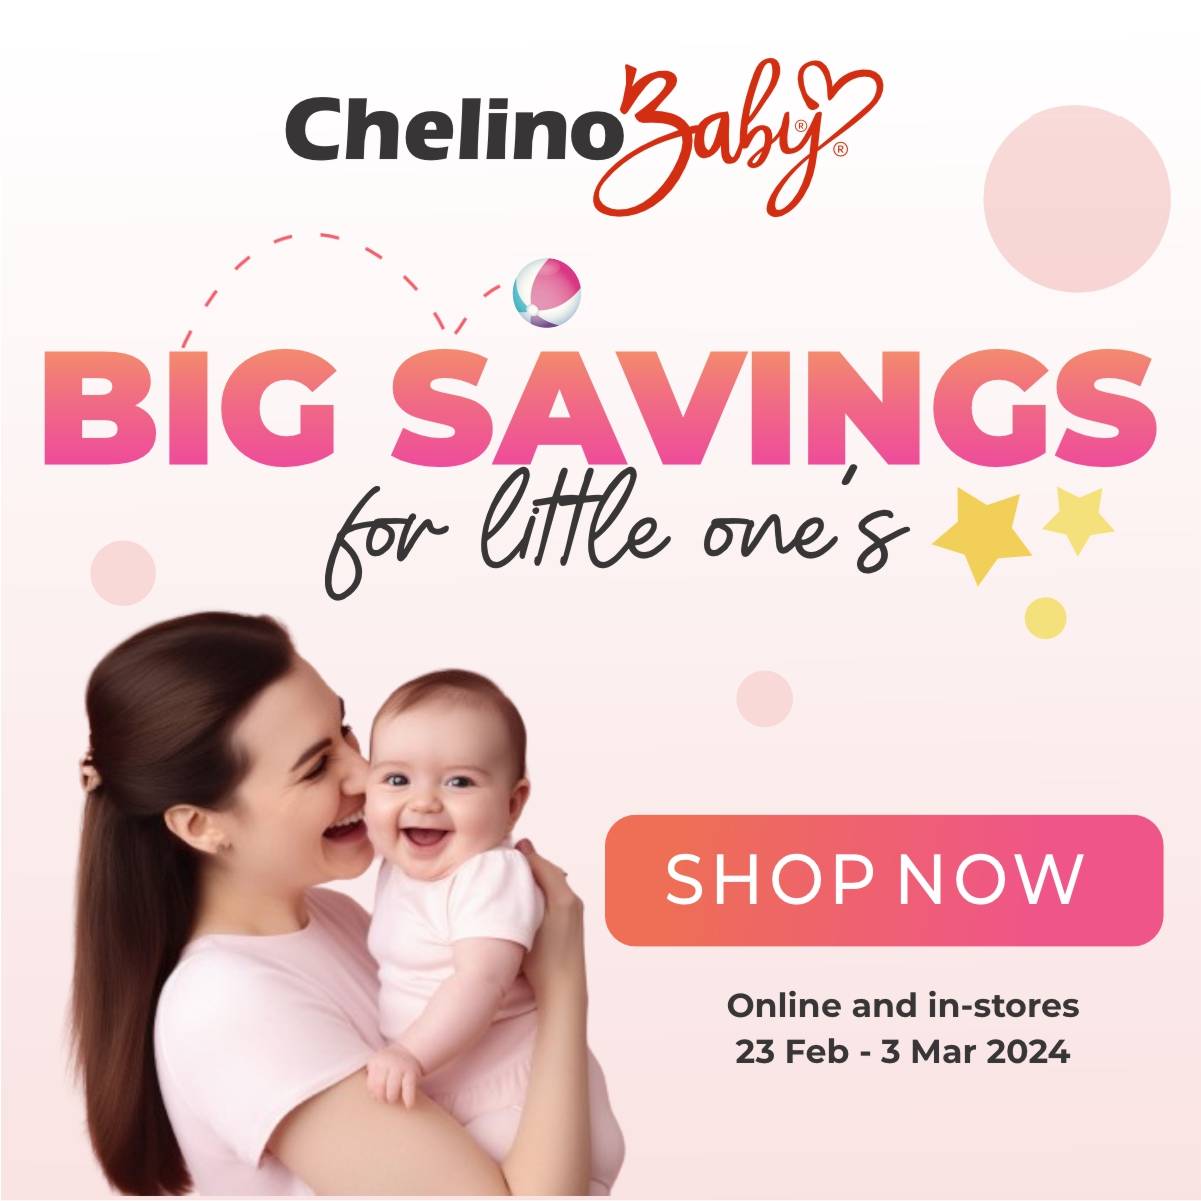 Chelino Baby Care - Chelino